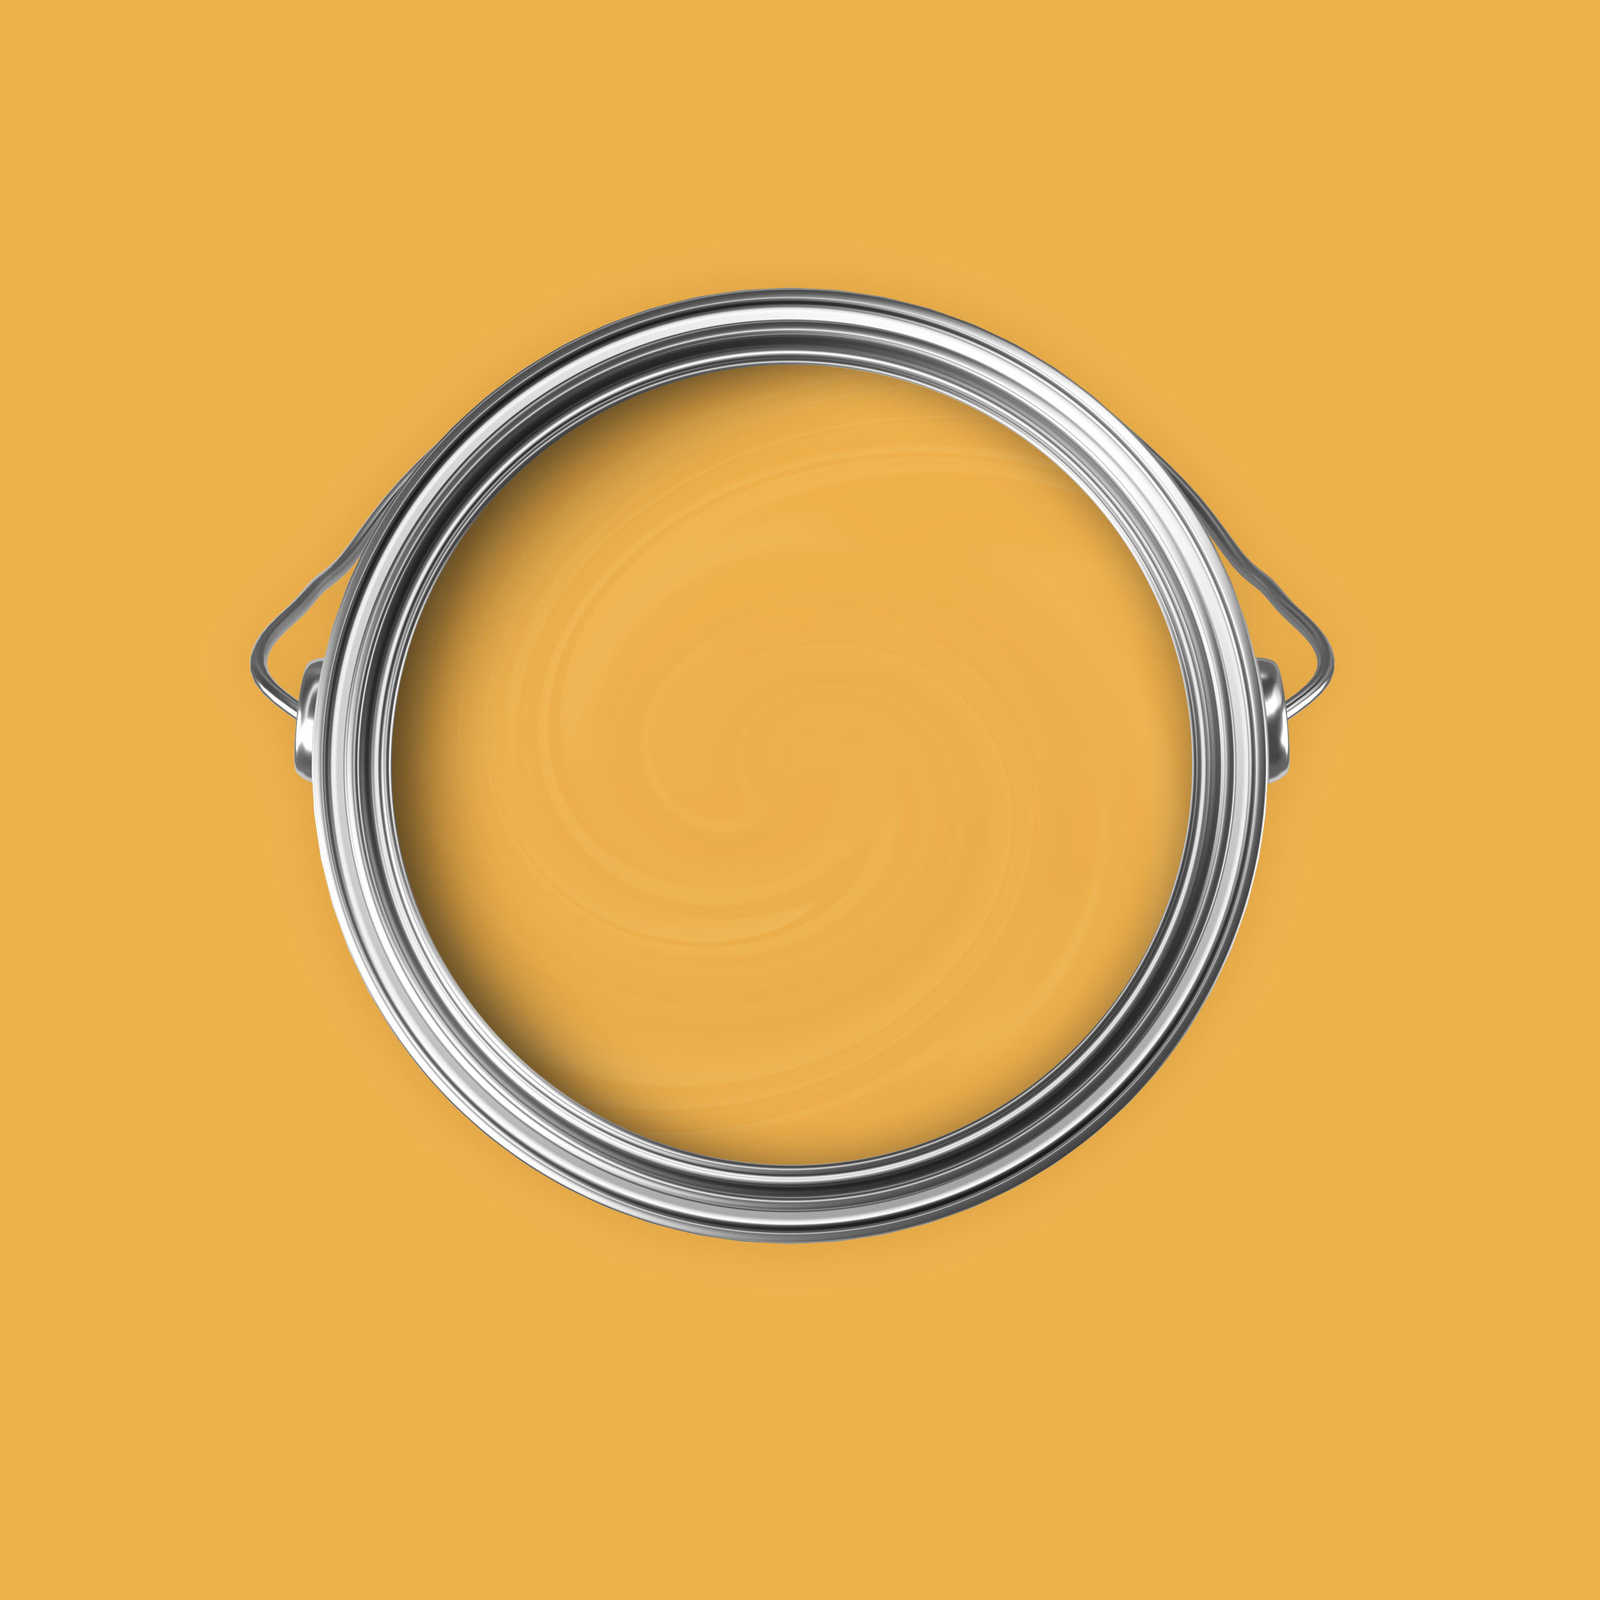             Premium Wandfarbe kräftiges Safrangelb »Juicy Yellow« NW806 – 5 Liter
        